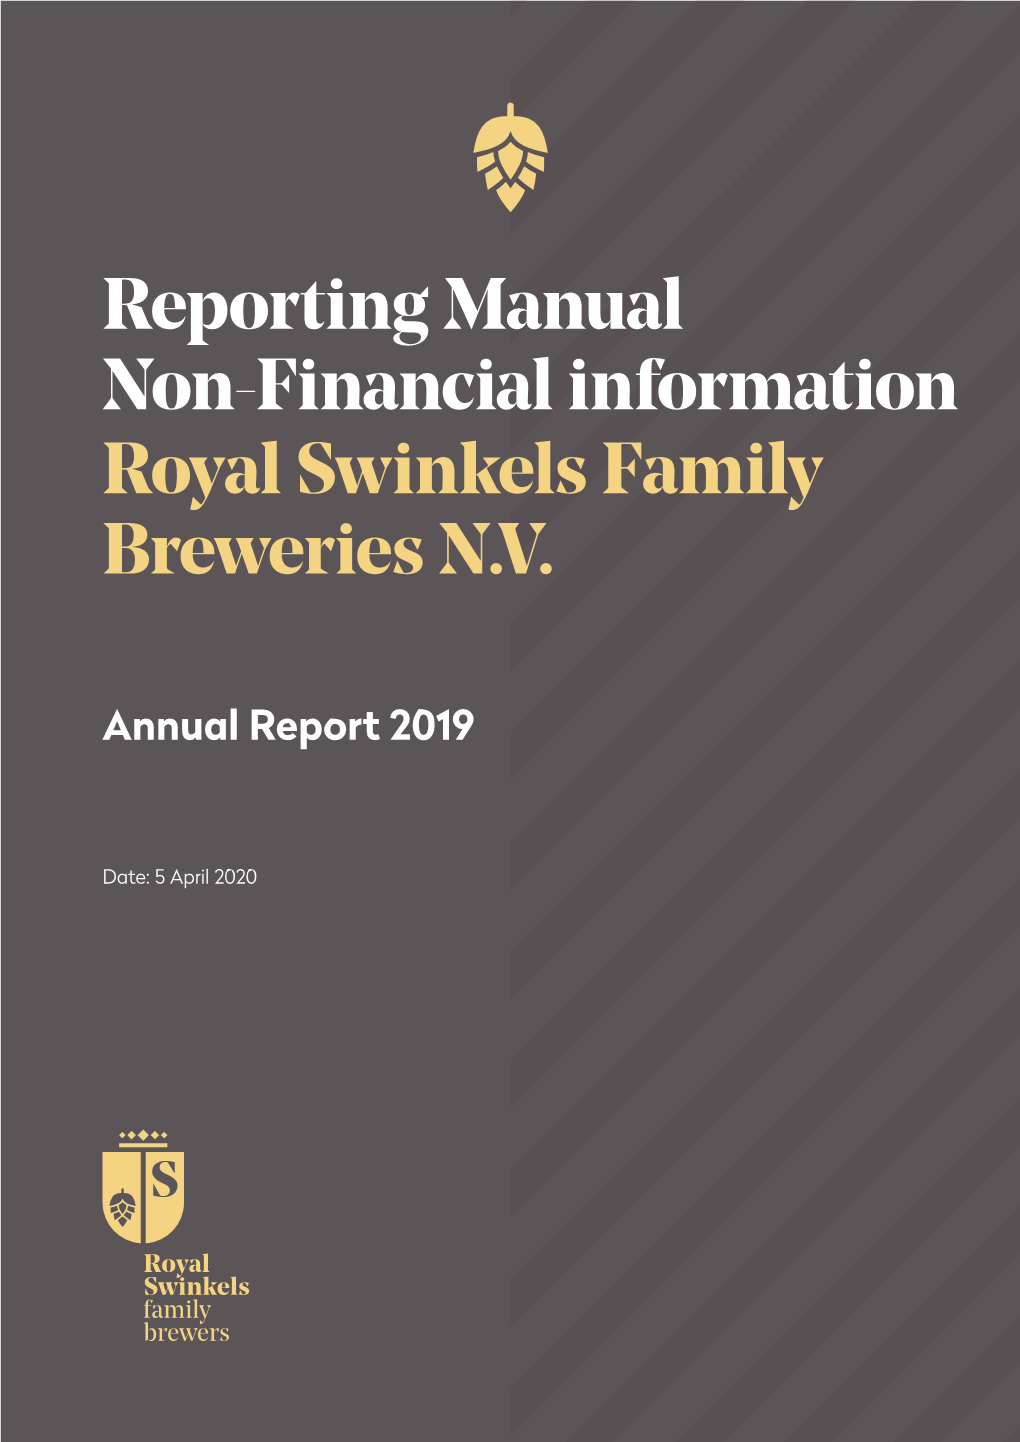 Reporting Manual Non-Financial Information Royal Swinkels Family Breweries N.V